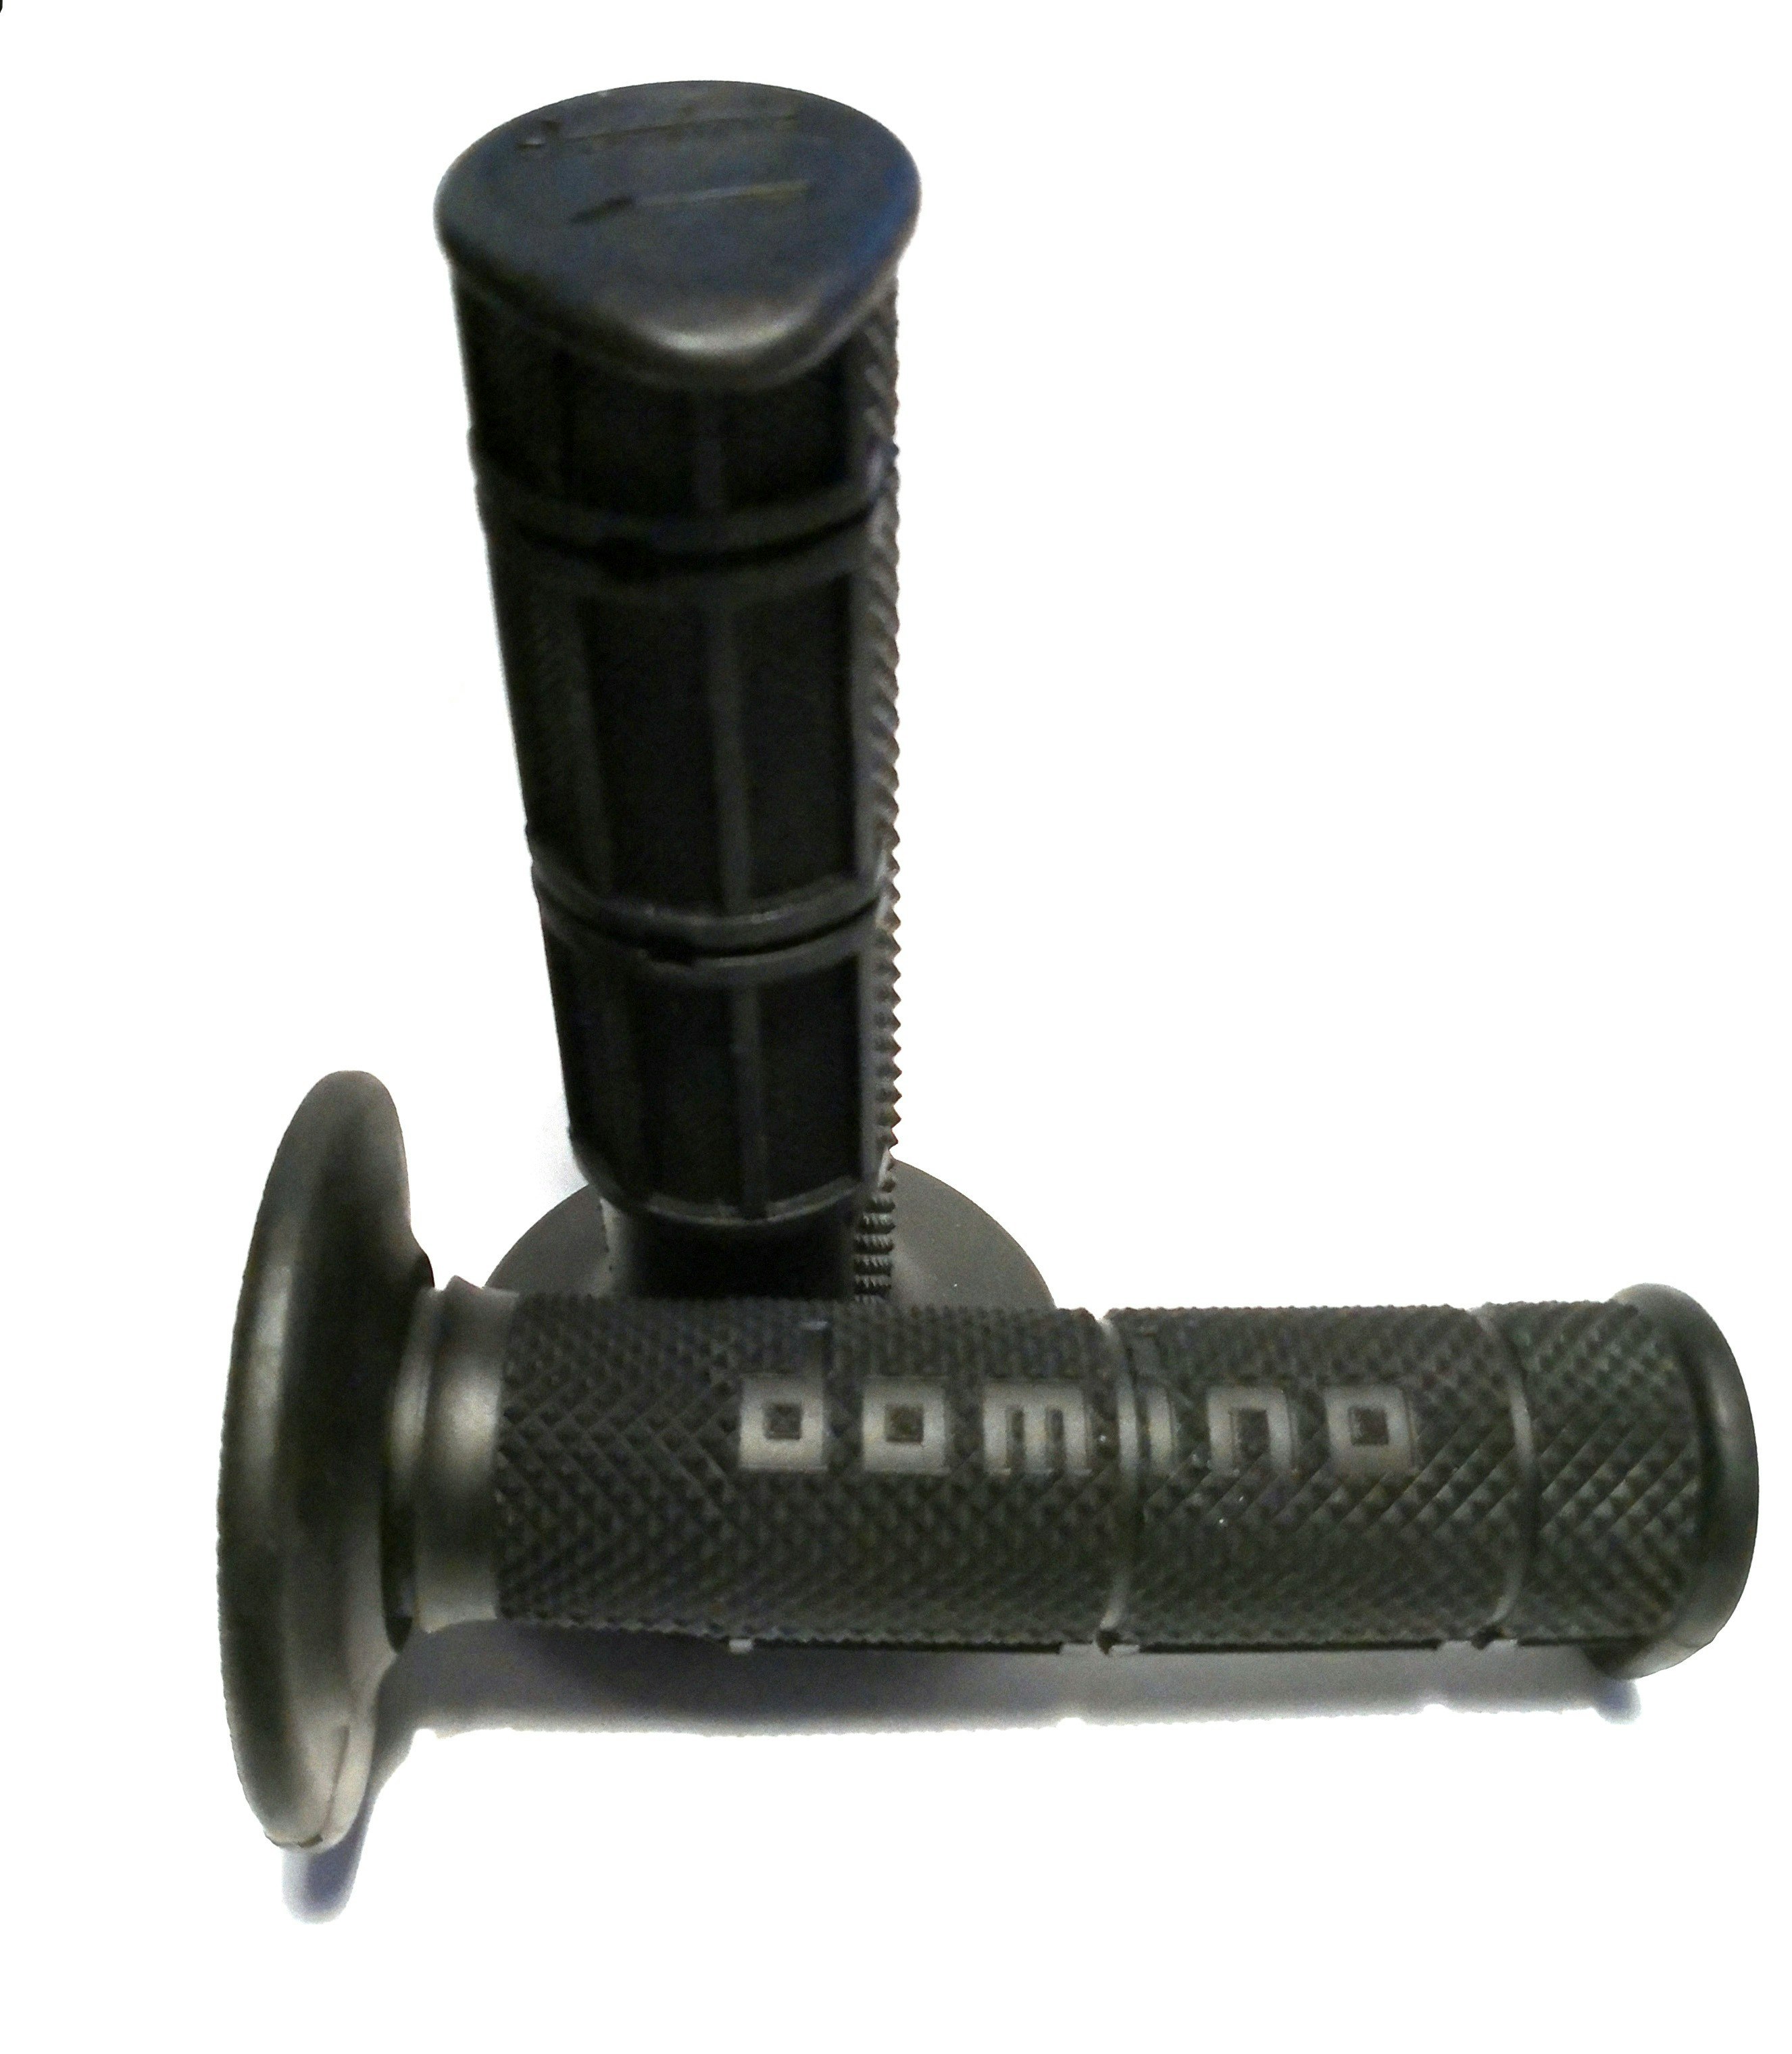 Domino gummihandtag Half Waffle svarta. Moped, MC mm